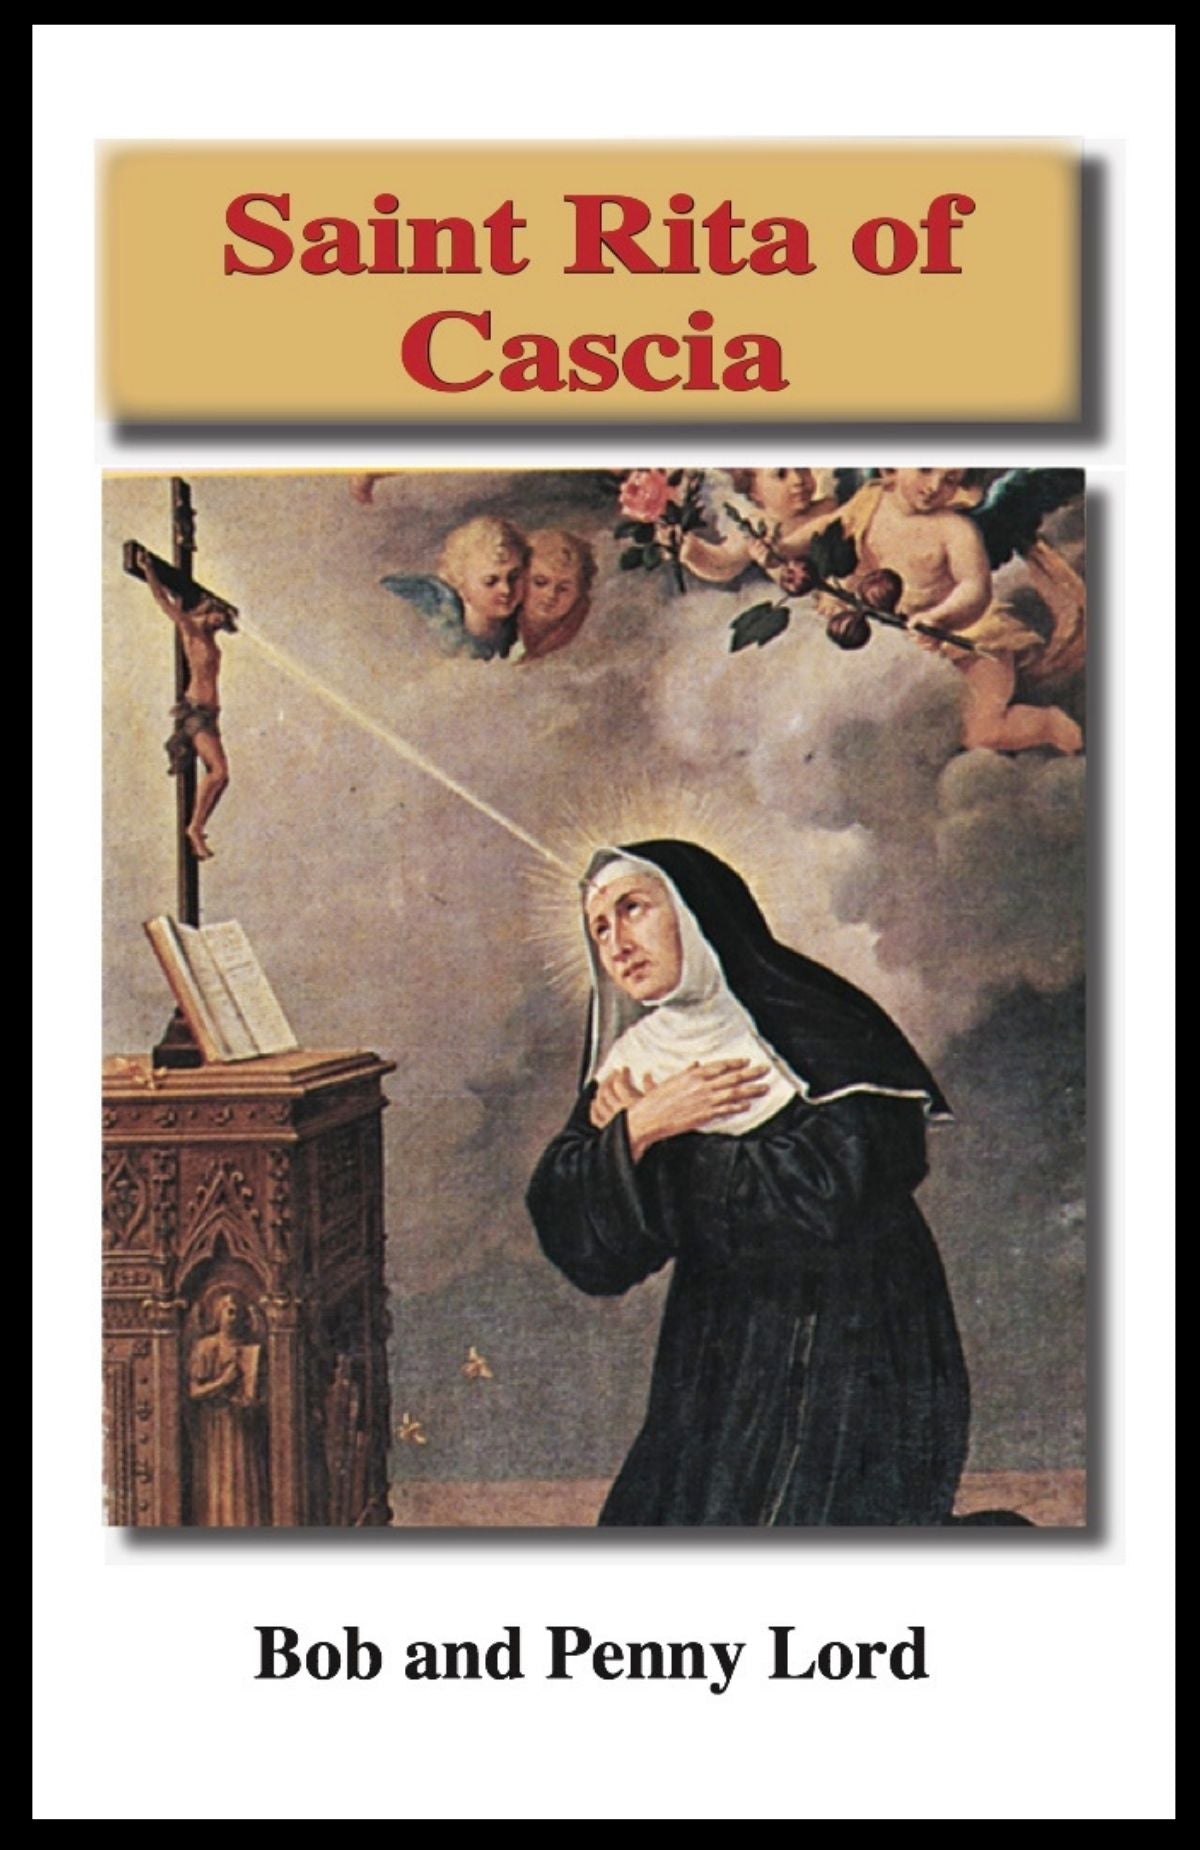 Saint Rita of Cascia Minibook - Bob and Penny Lord